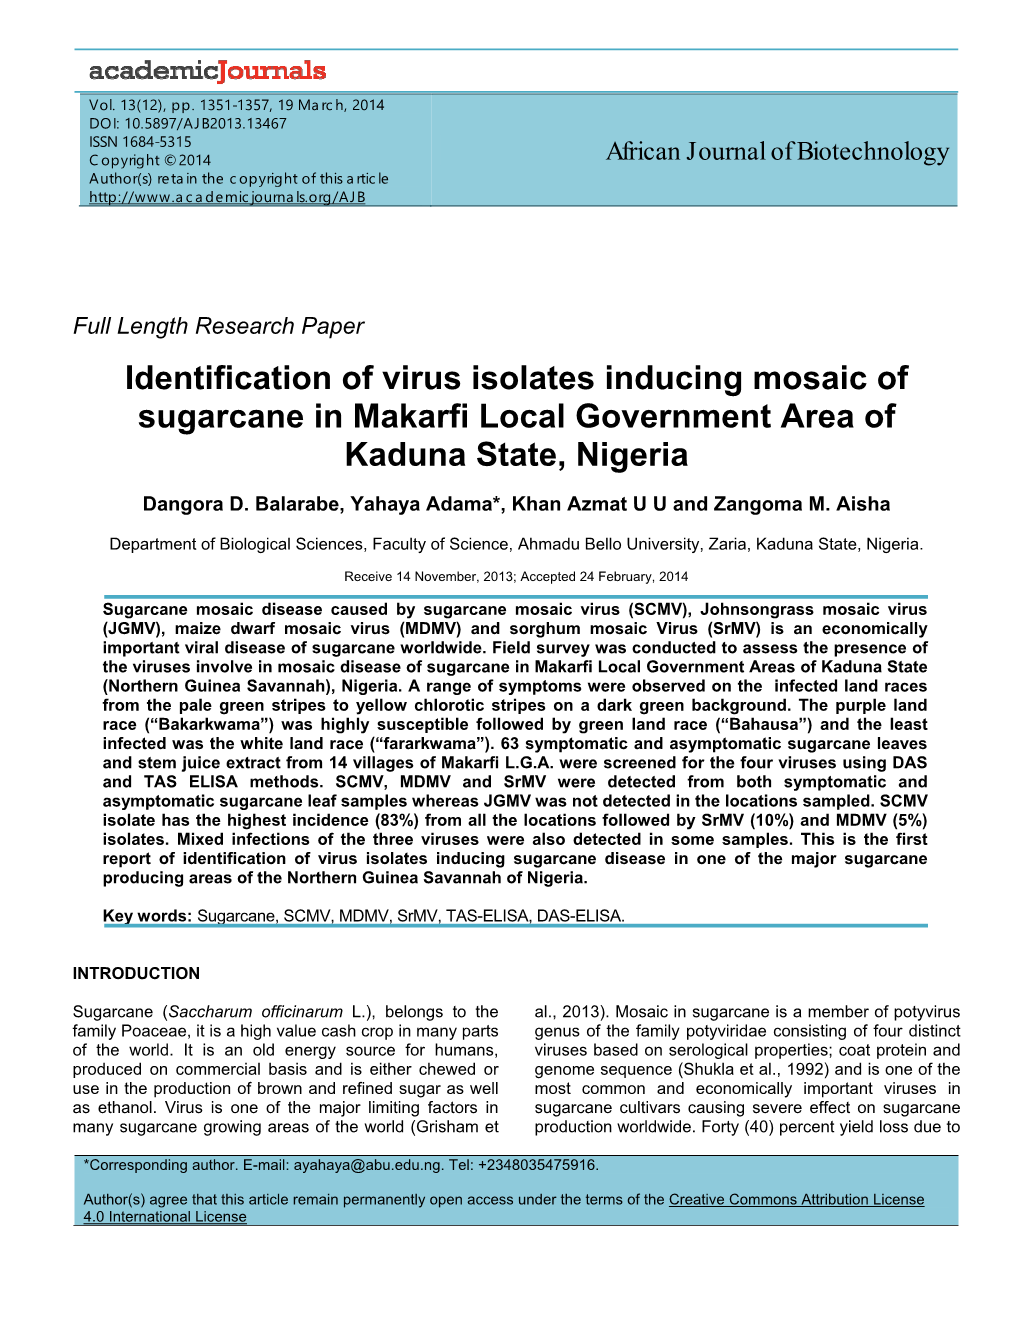 Identification of Virus Isolates Inducing Mosaic of Sugarcane in Makarfi Local Government Area of Kaduna State, Nigeria